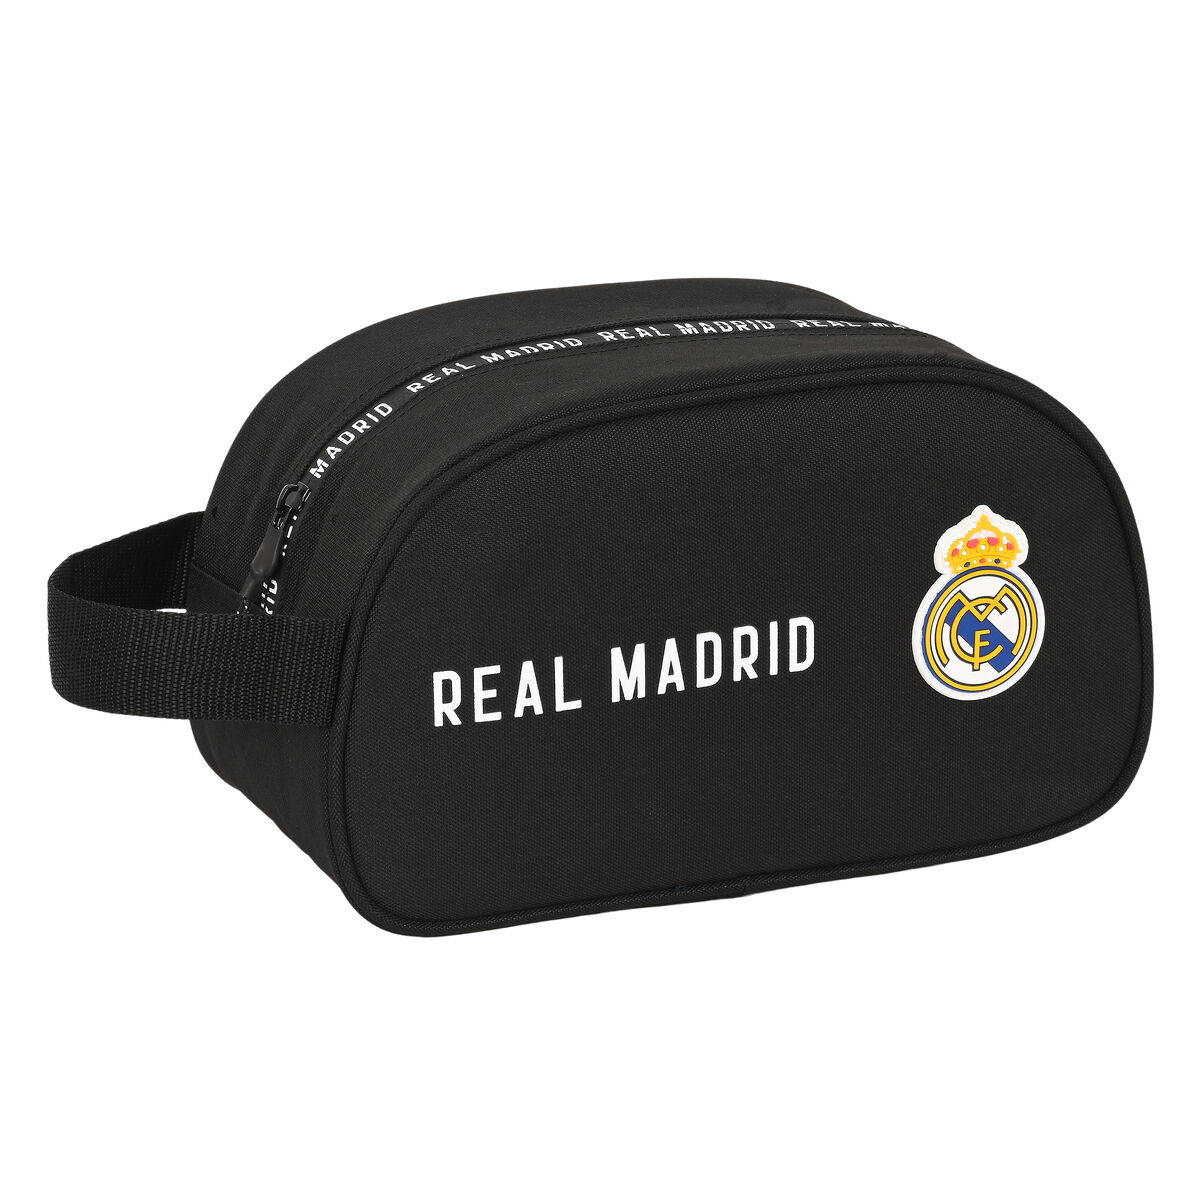 Neceser-Producto Oficial del Real Madrid, Portatodo,Neopreno,resistente,  para viajes,hoteles,domicilio,impermeable,escolar, con cremallera,negro